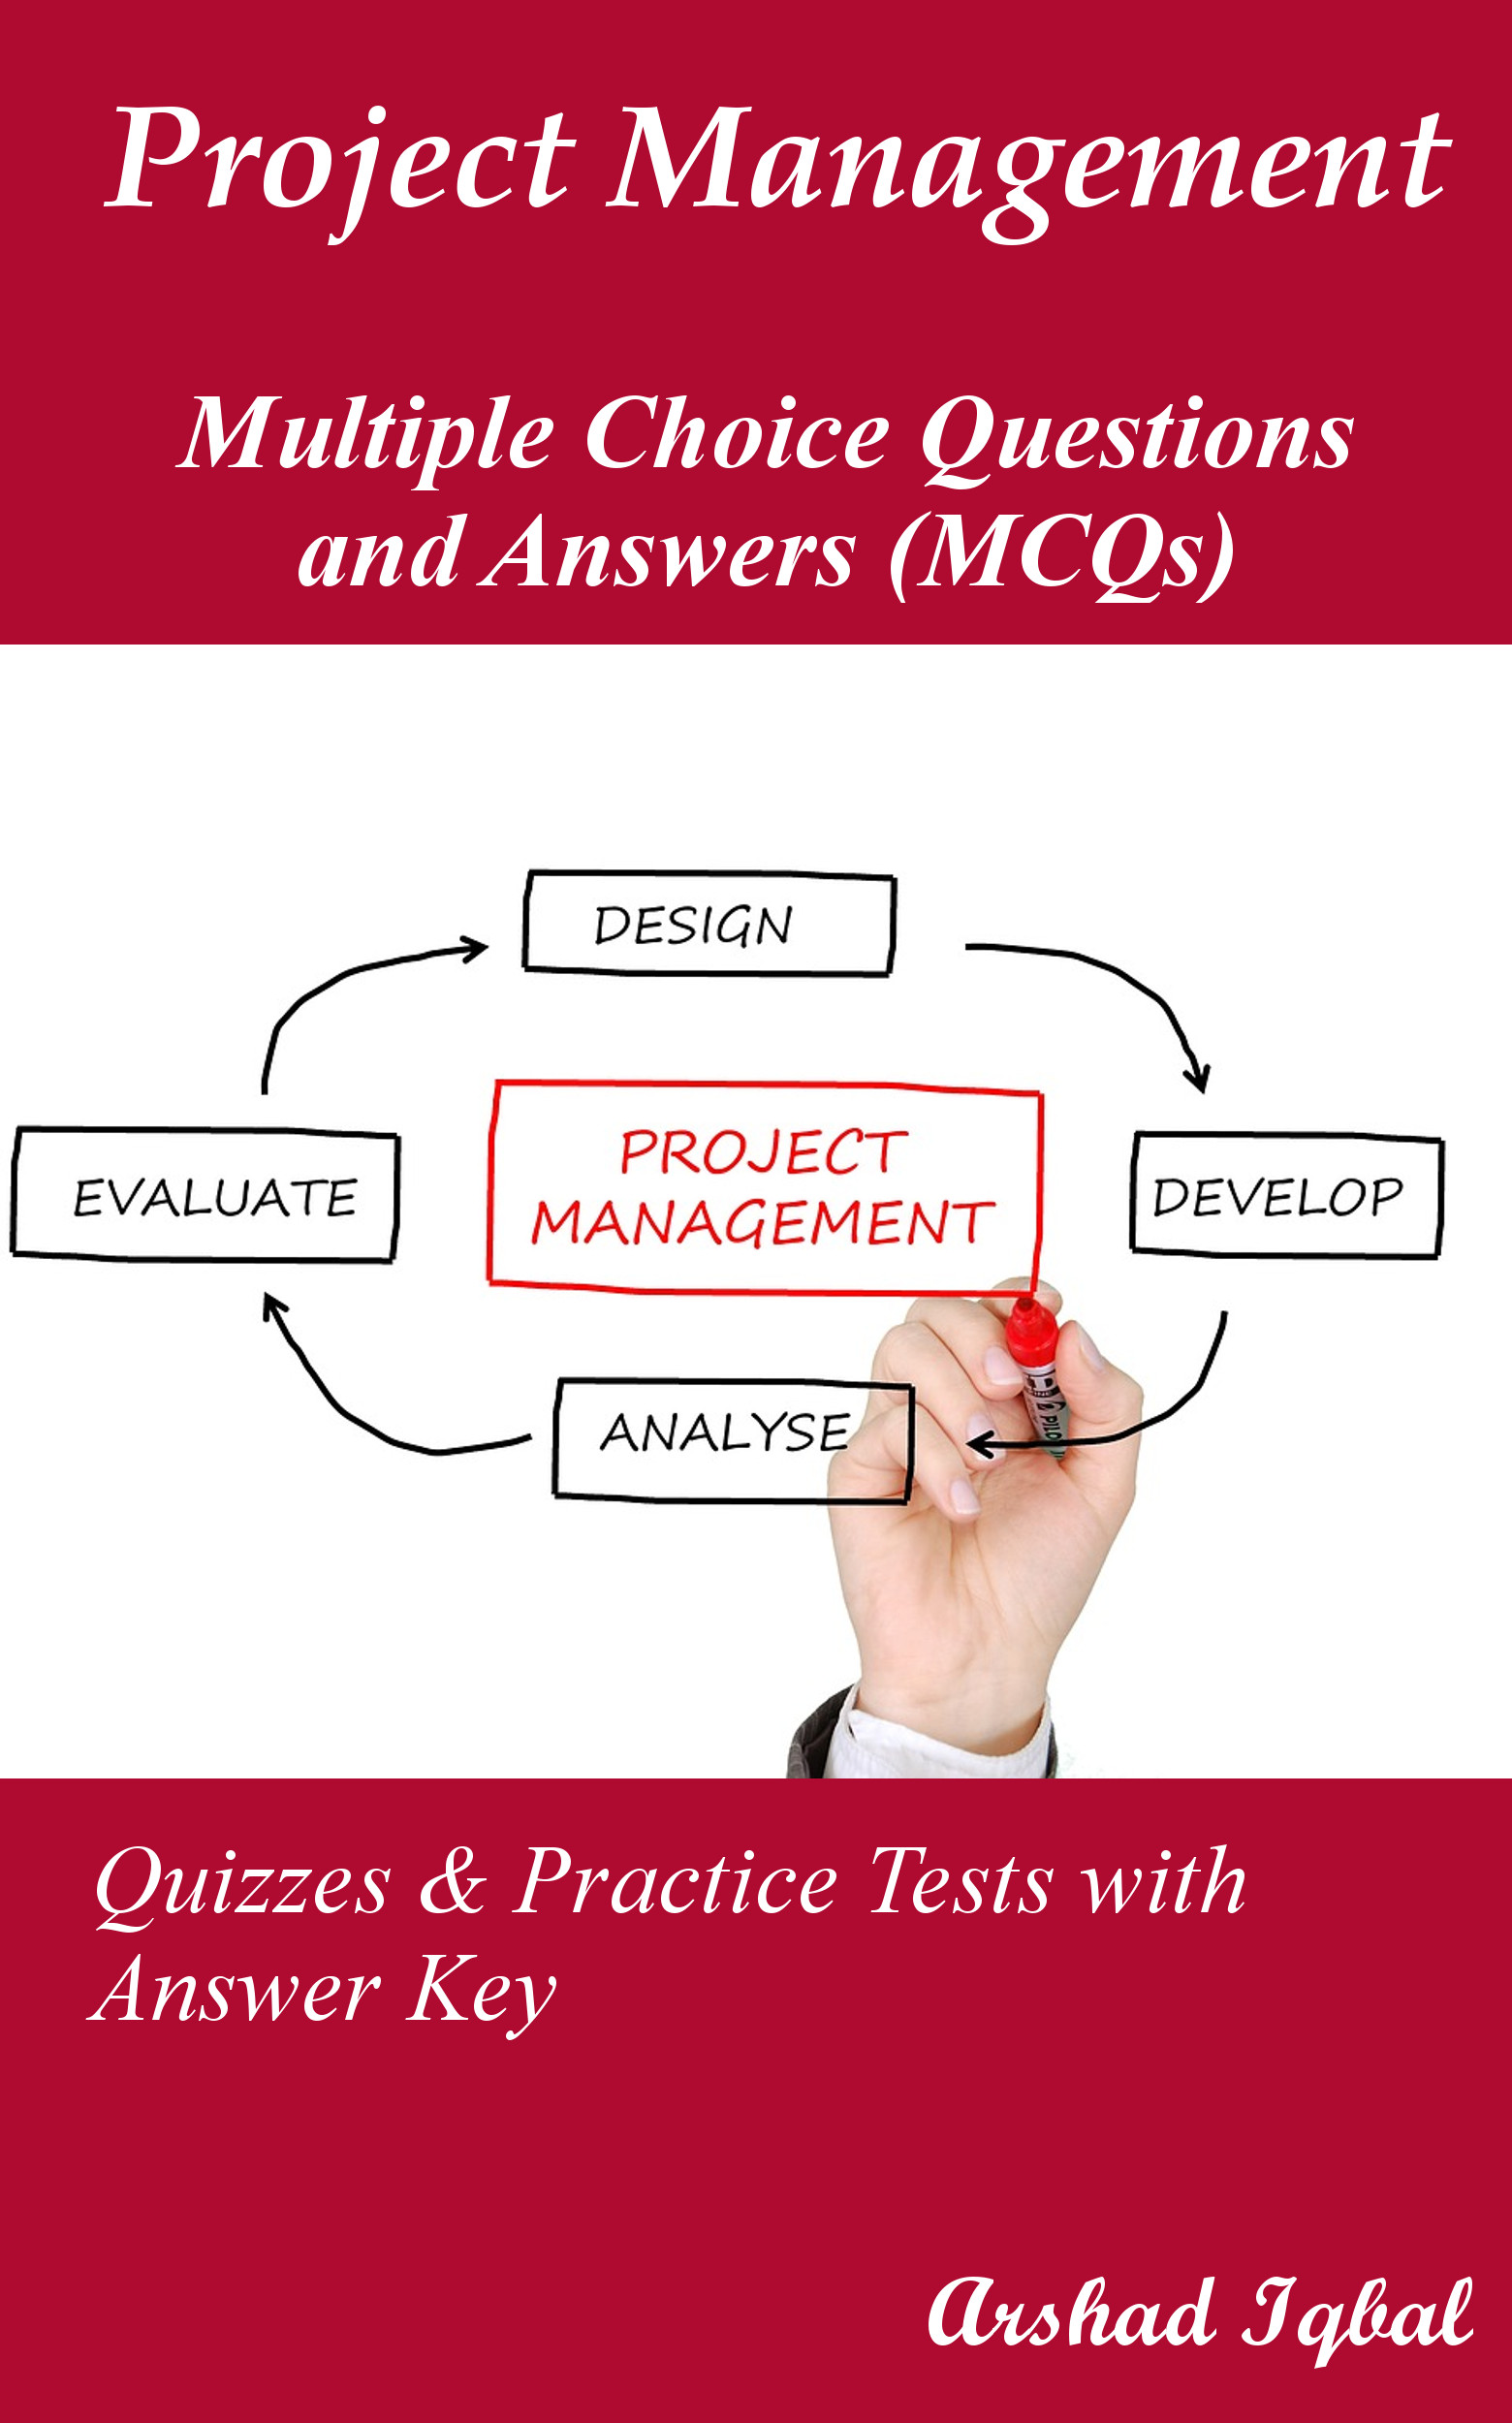 Project Management Book PDF